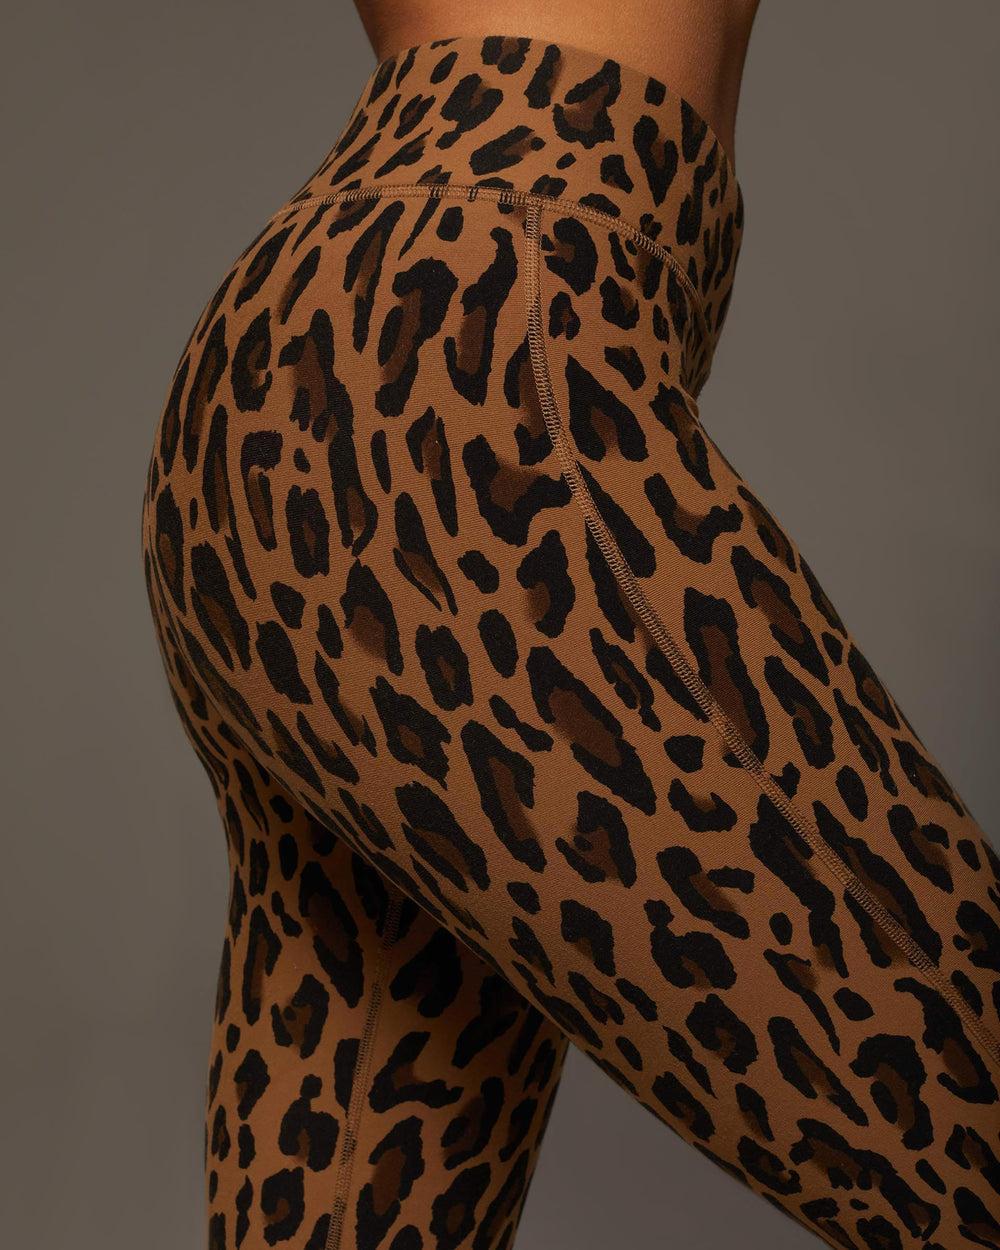 Verve Leopard Print Legging - Brown